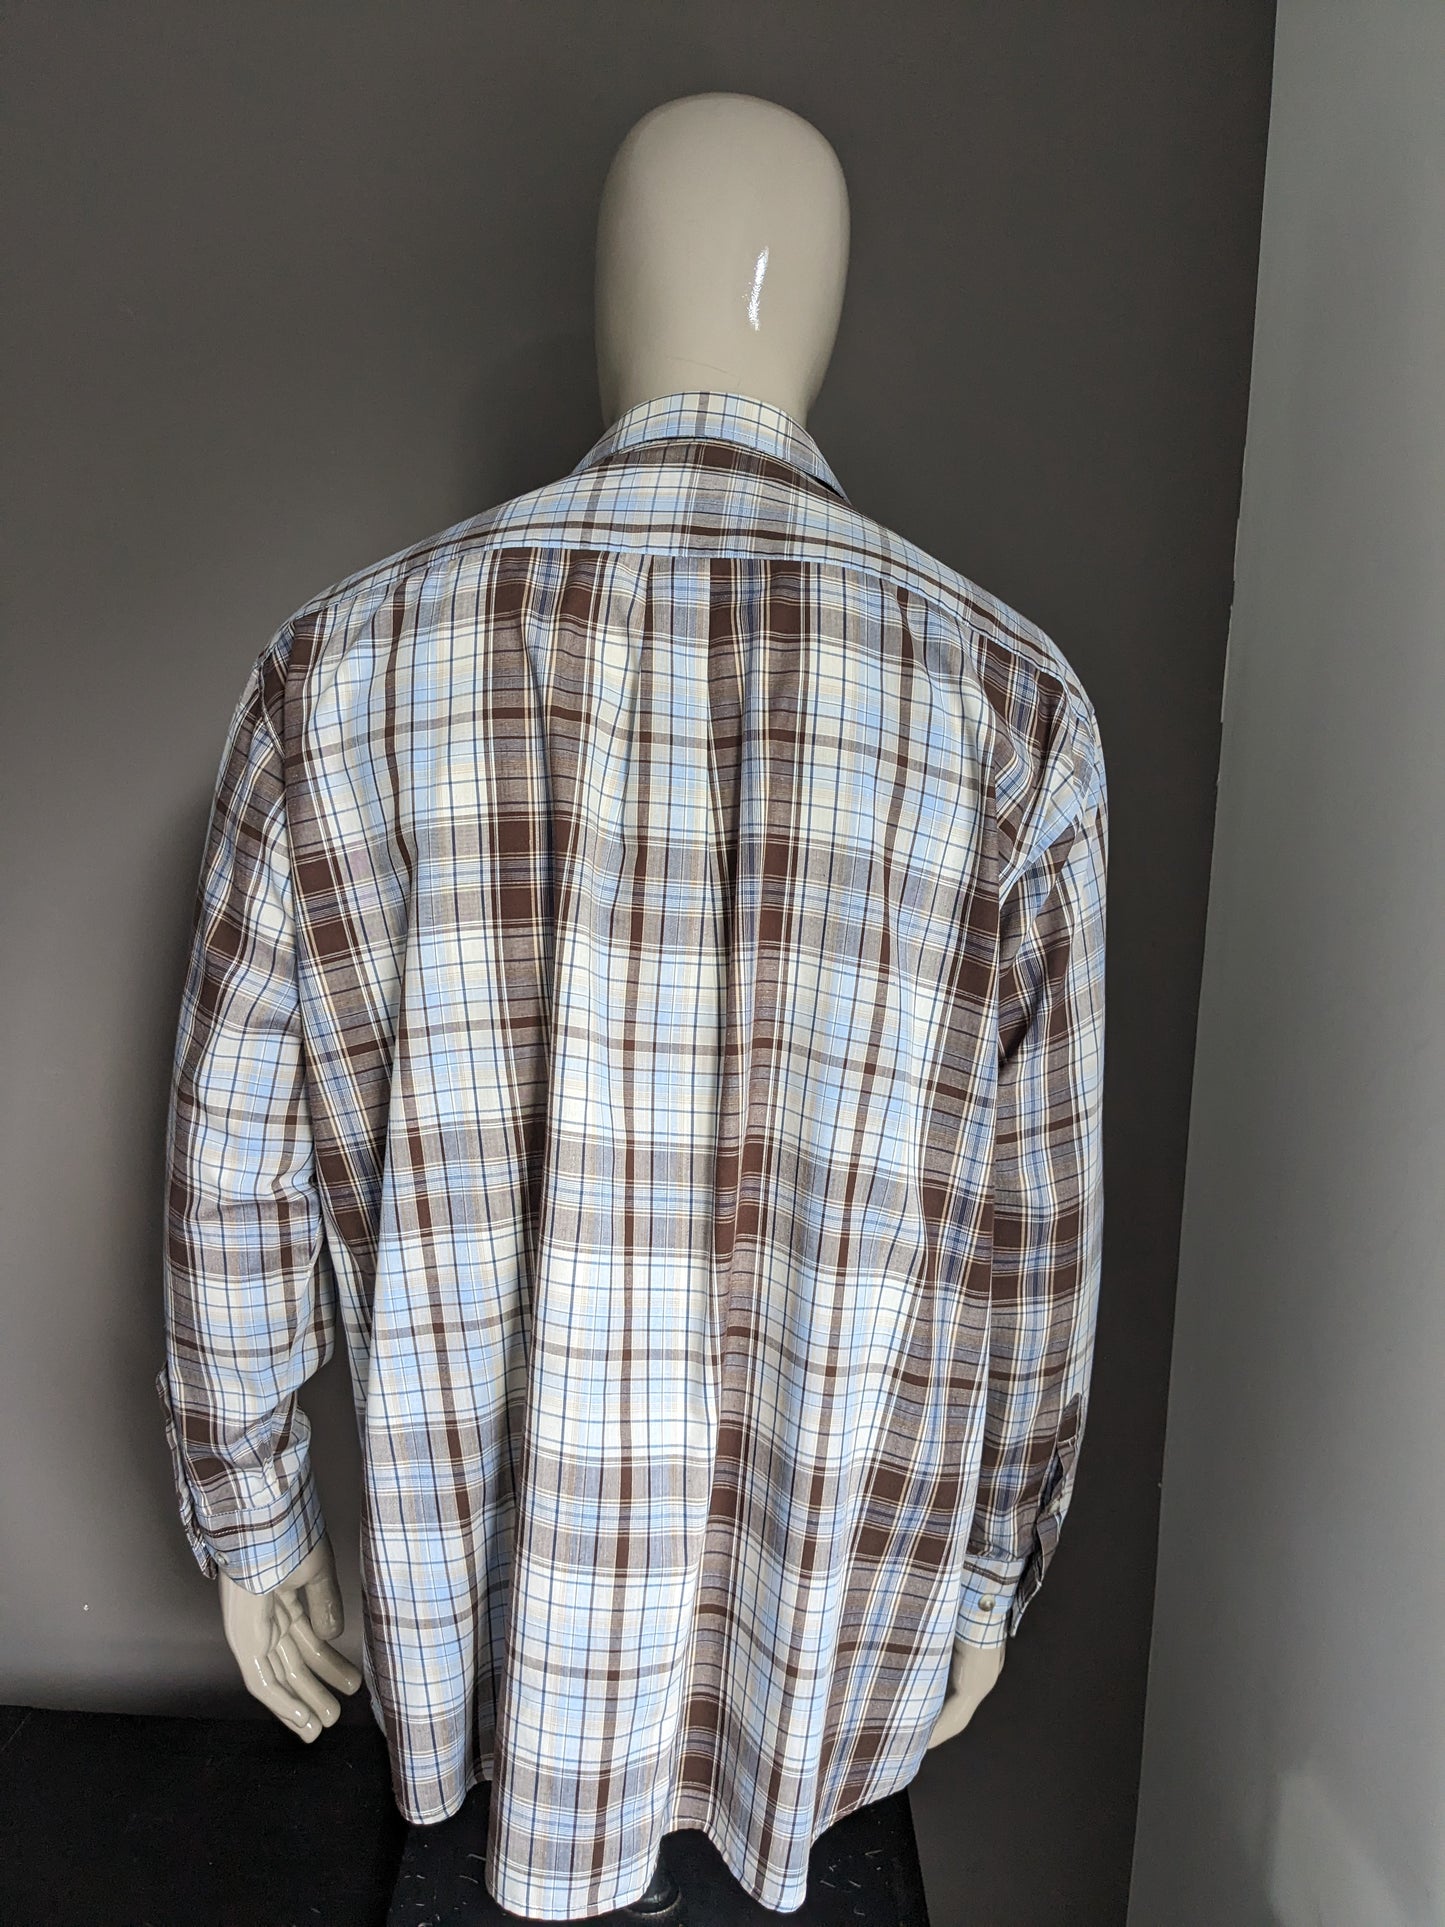 Camicia affilata vintage. Checker beige marrone blu. Dimensione 2xl / 3xl.